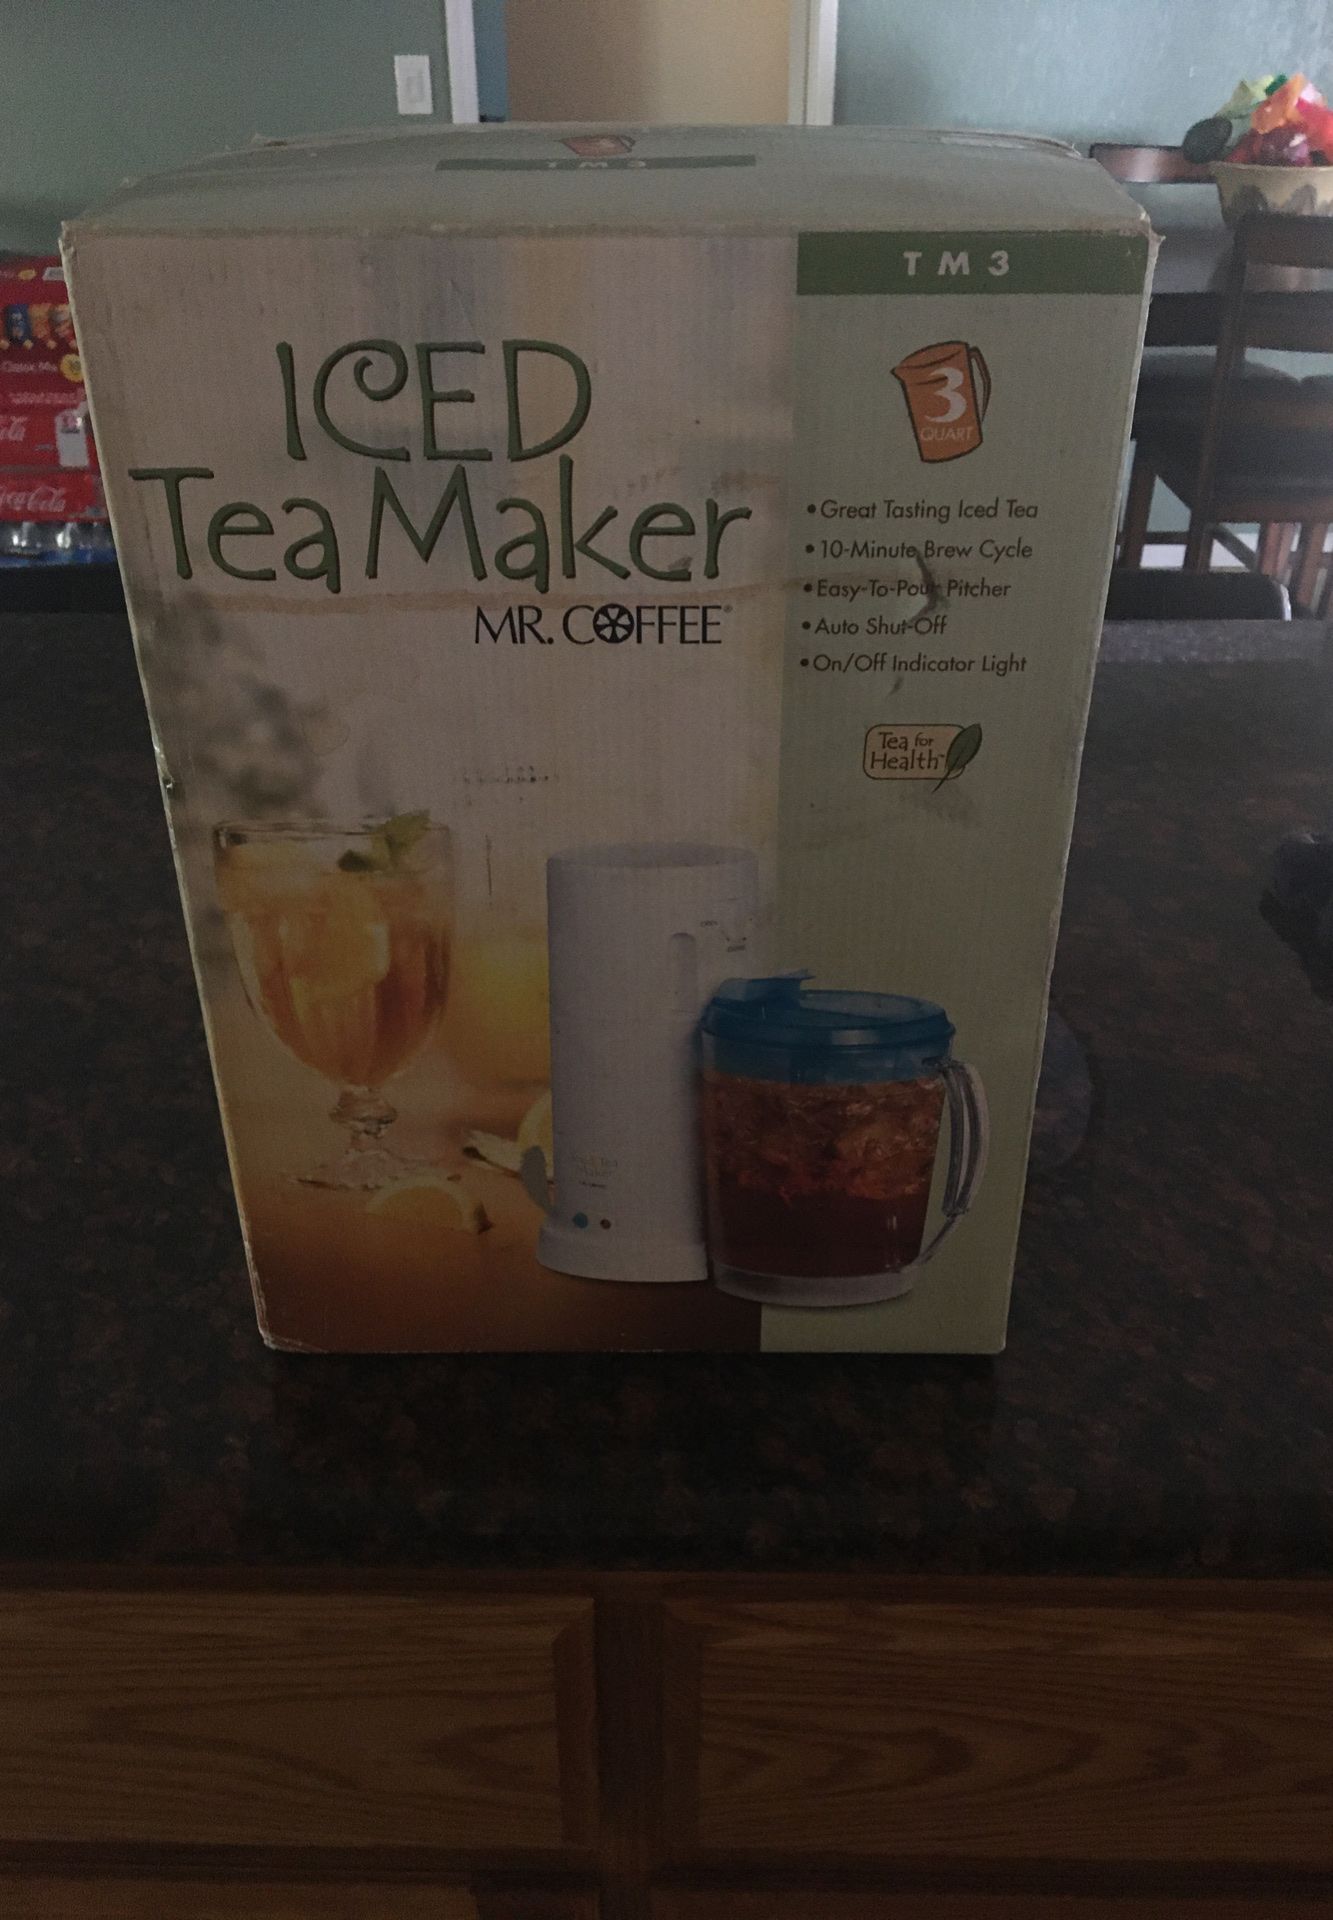 Me coffee iced tea maker